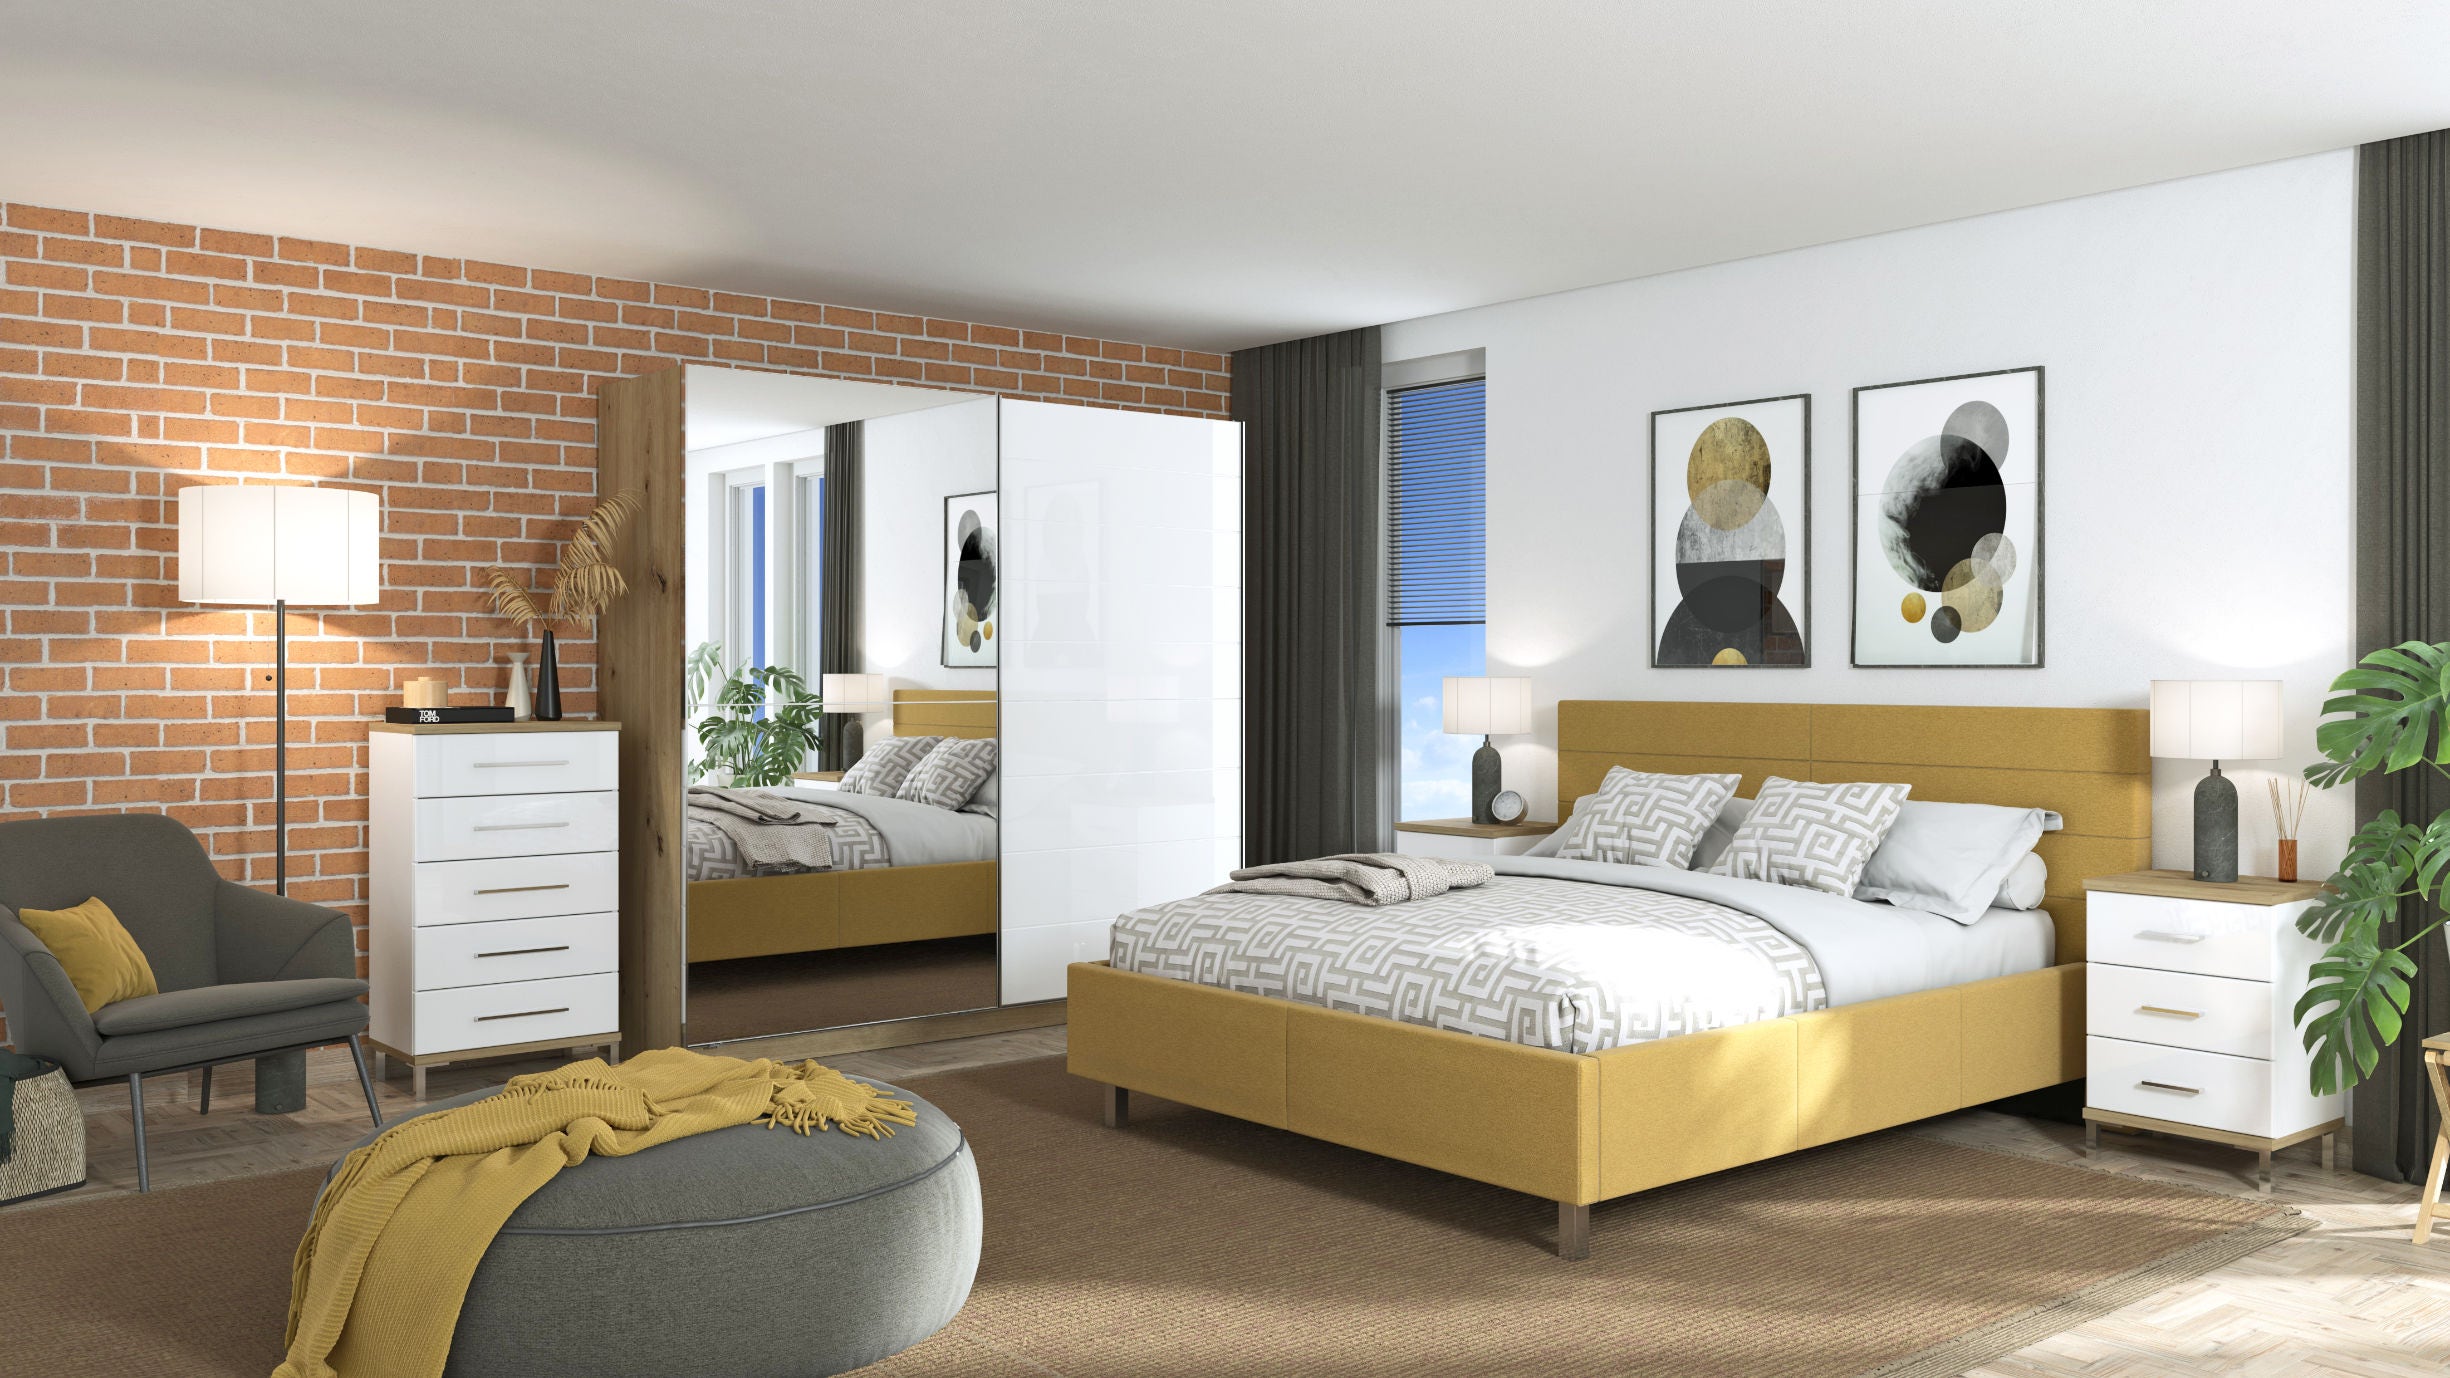 Comoda dormitor Mondego 5F, cu 5 sertare, stejar artisan + alb mat + folie lucioasa alba, 60 x 105 x 40 cm, 1C